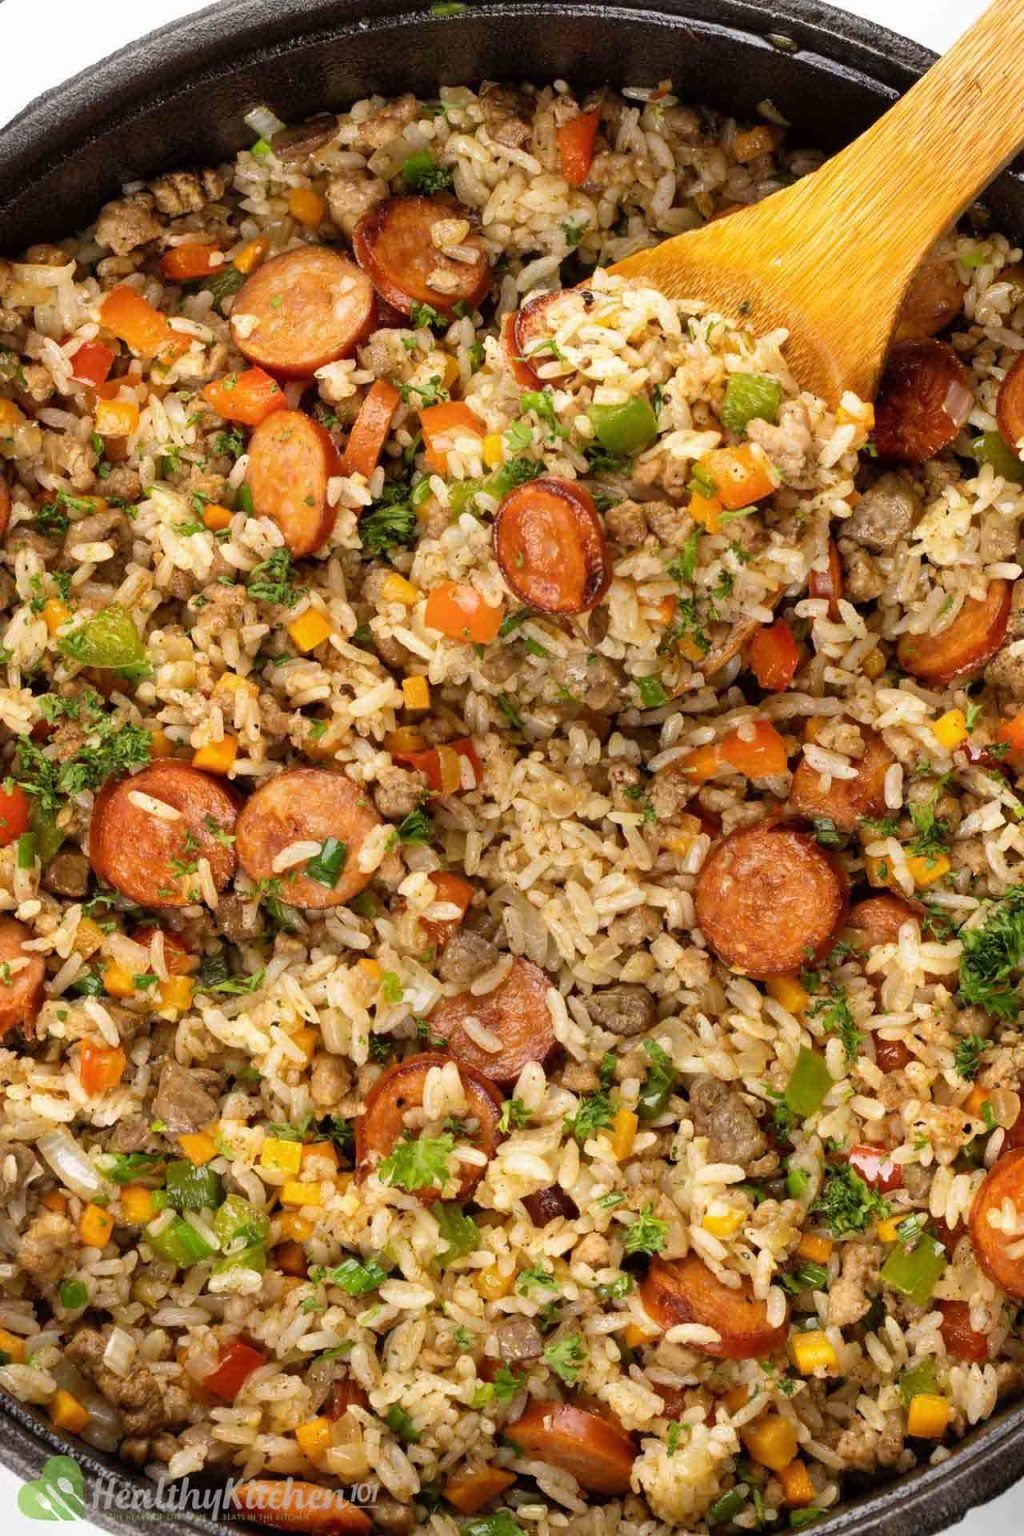 Dirty Rice Recipe: A Healthy Take on a Louisiana Creole Classic